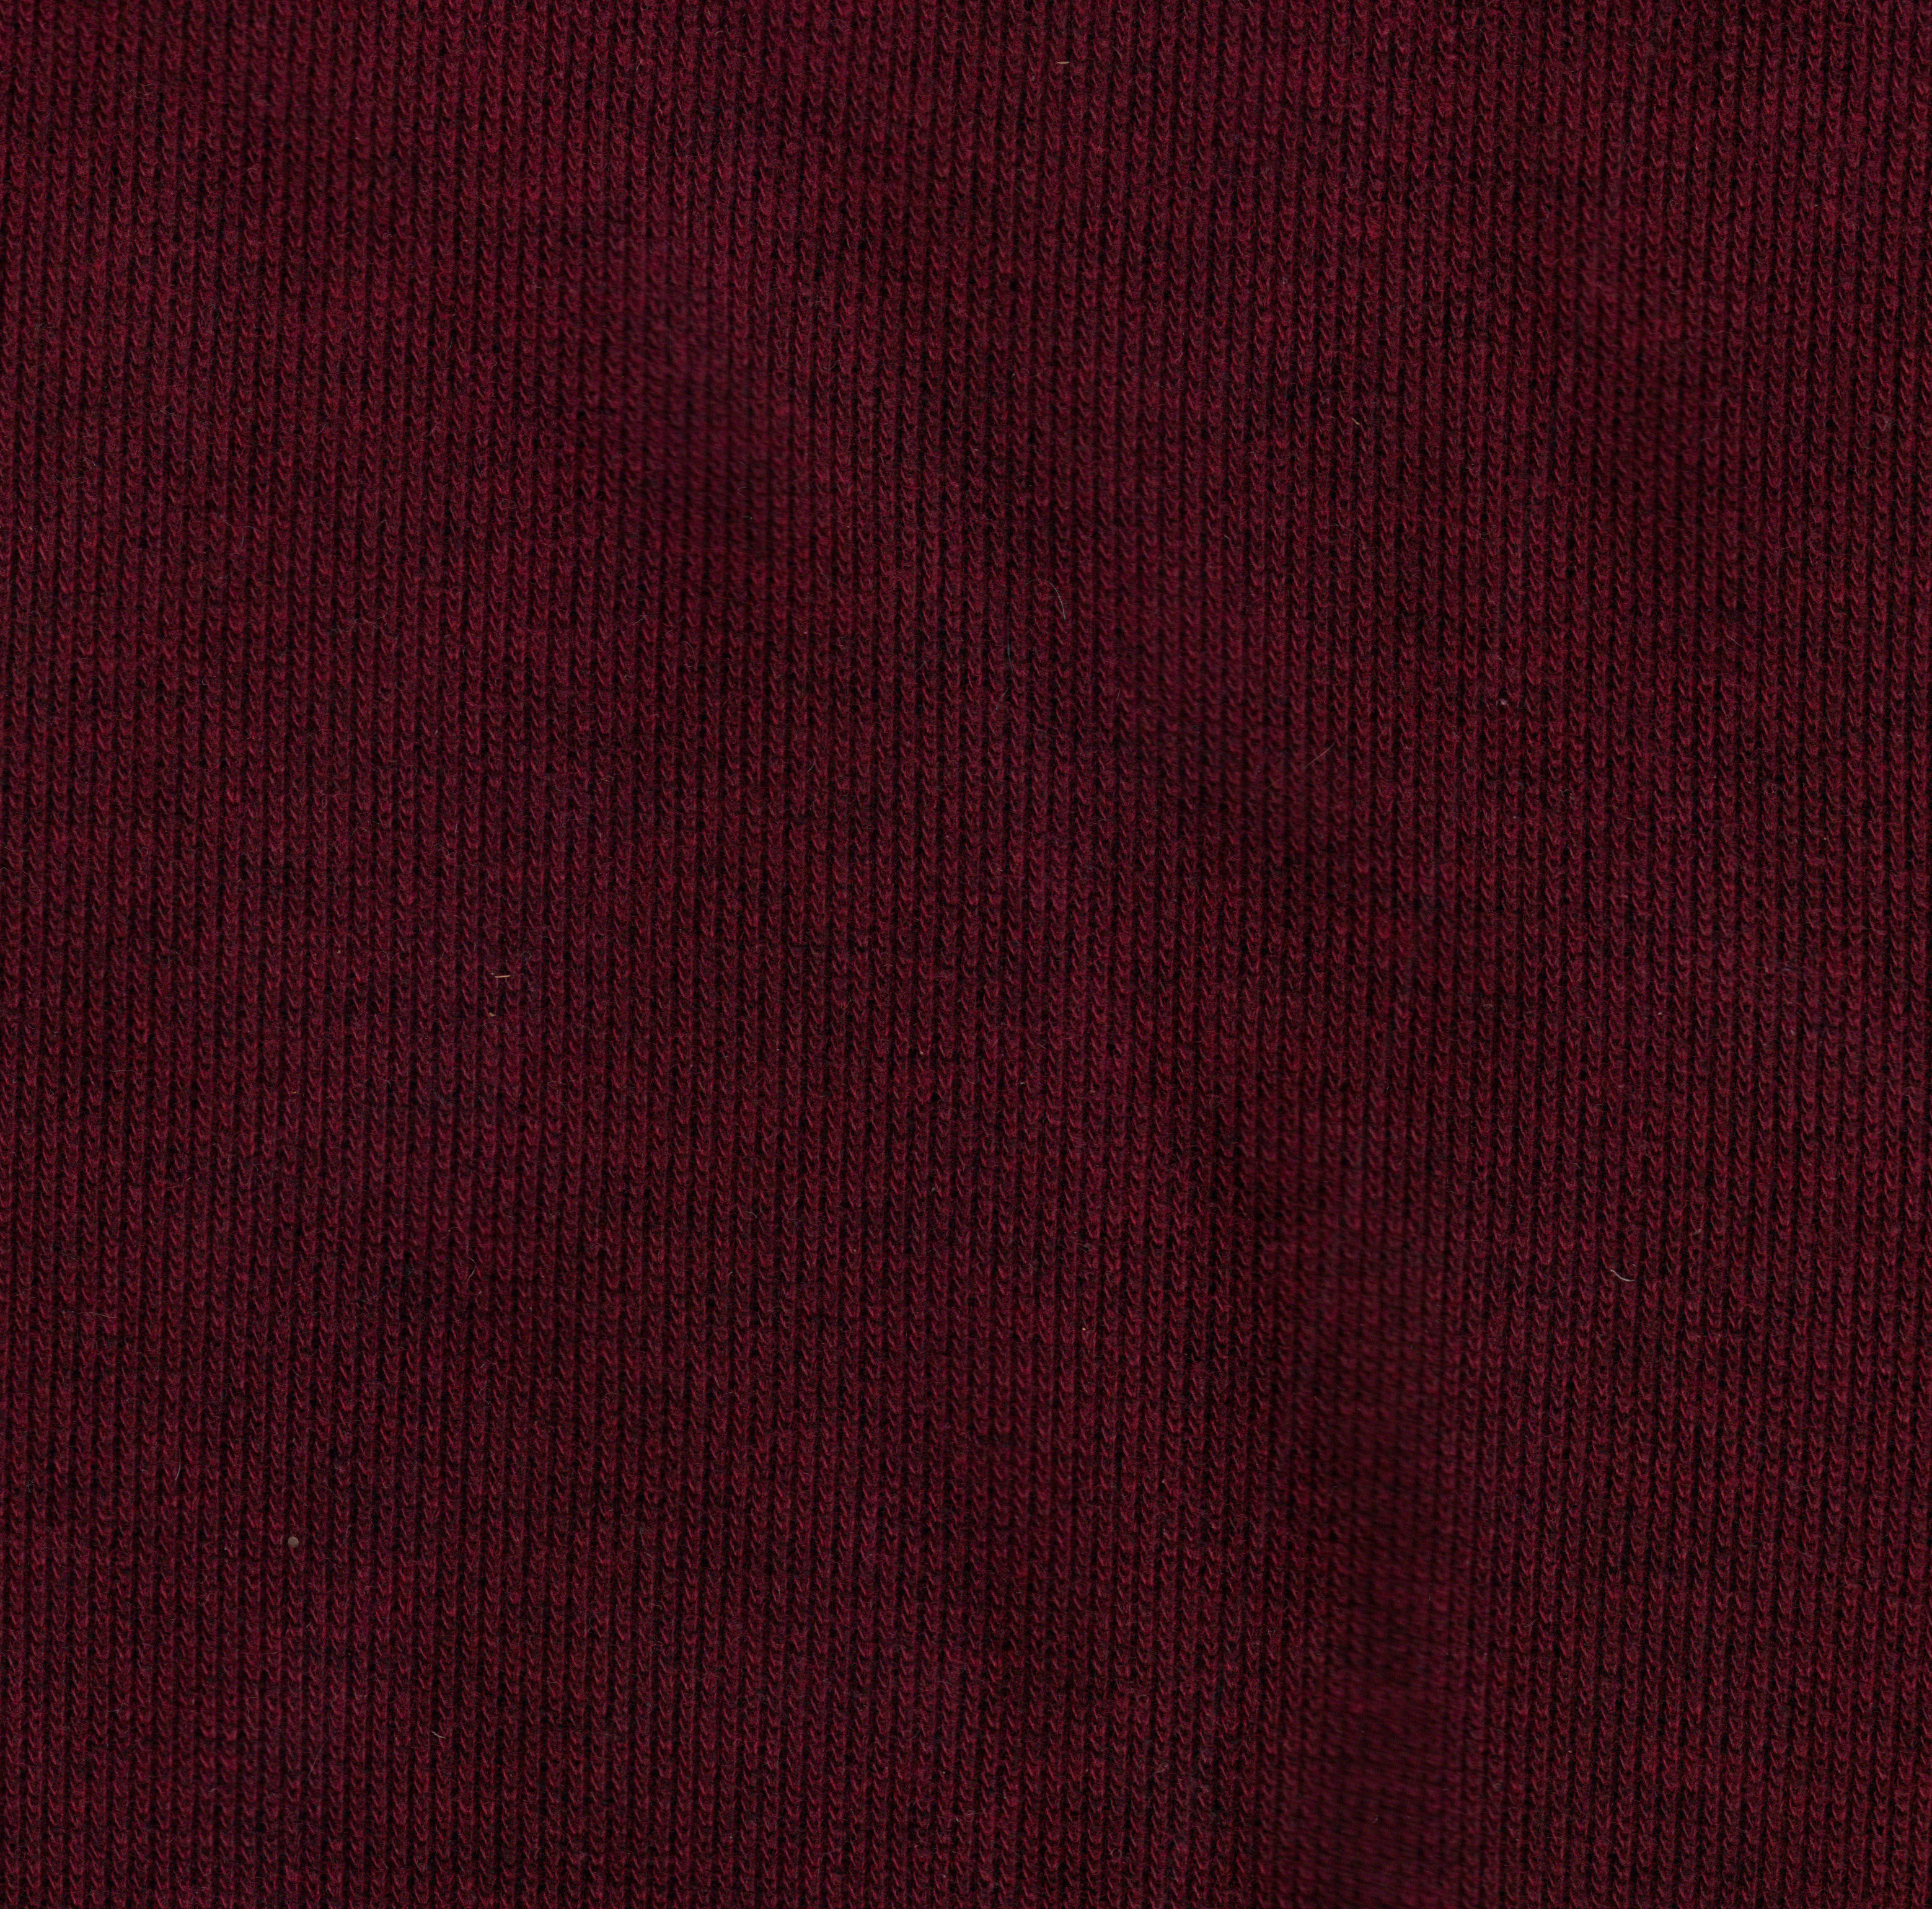 Plain Dark-Red Fabric Texture (JPG) | OnlyGFX.com